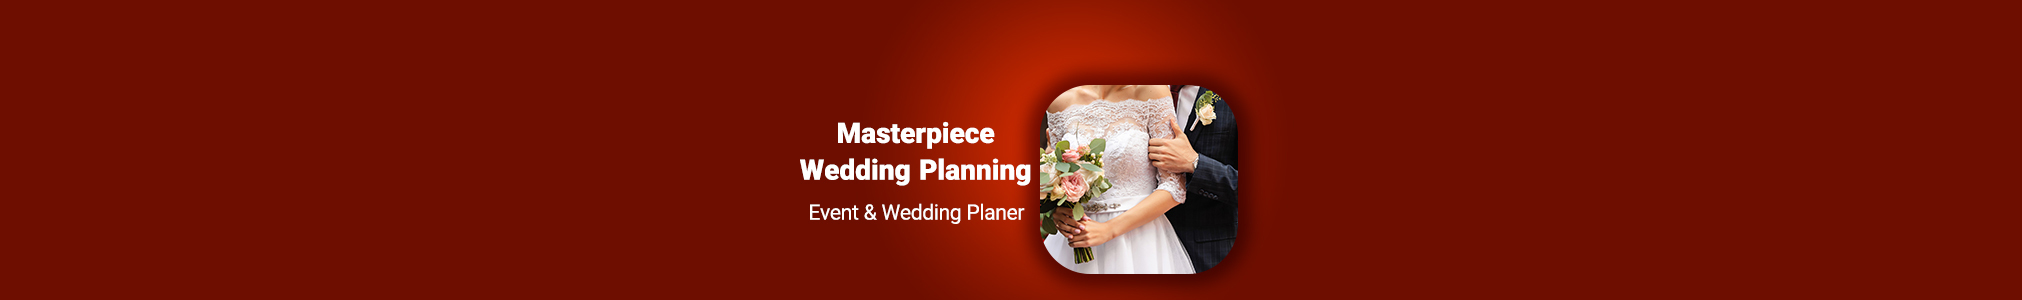 Masterpiece wedding planning